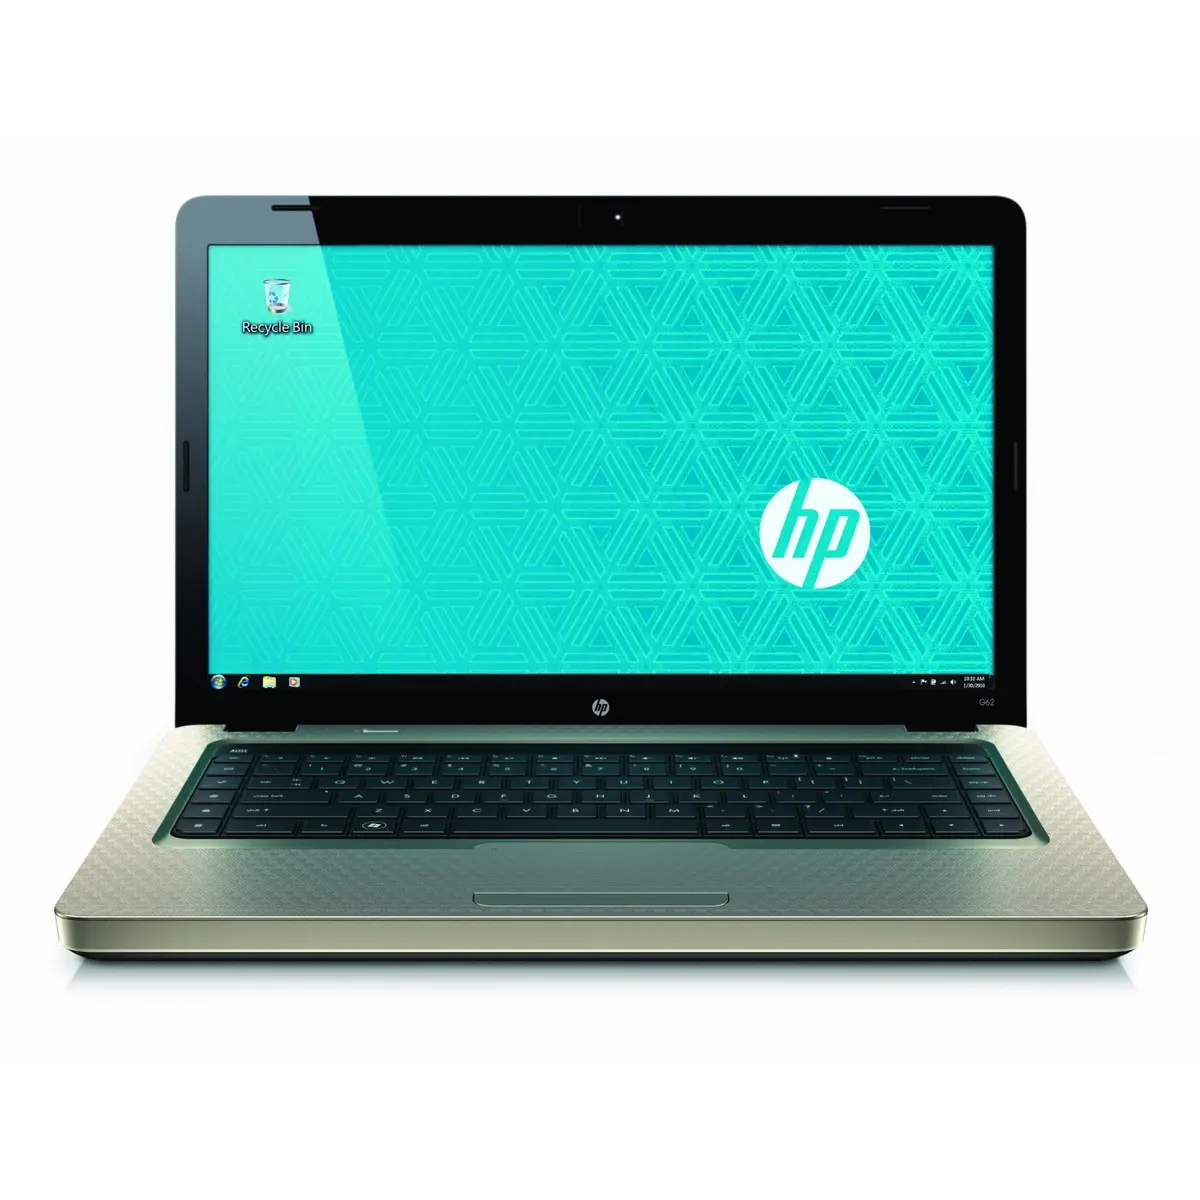 Hp g62 notebook pc: powerful performance & stunning display